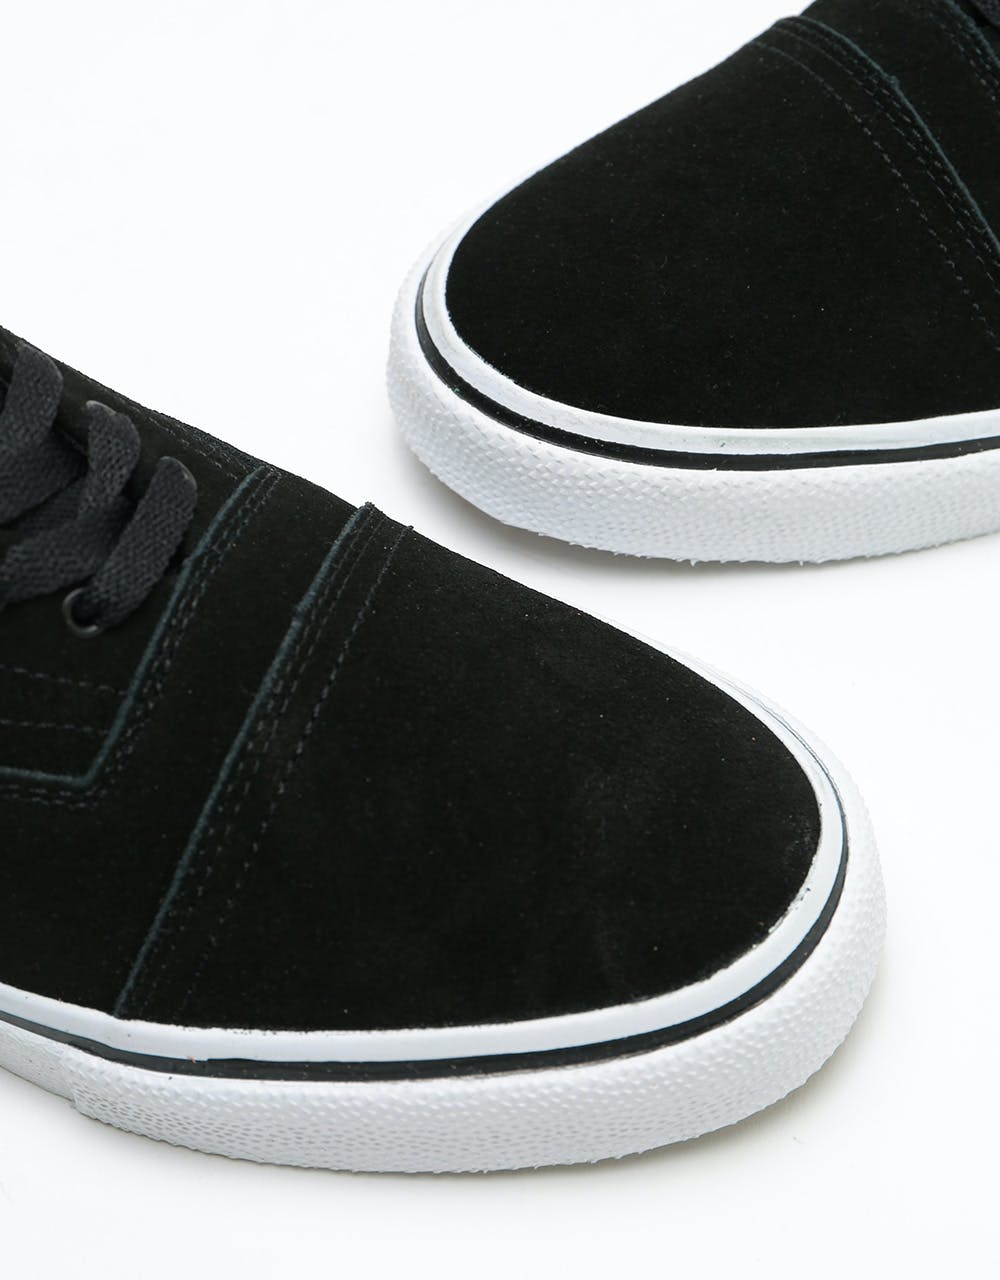 Emerica The Provider Skate Shoes - Black/White/Gold